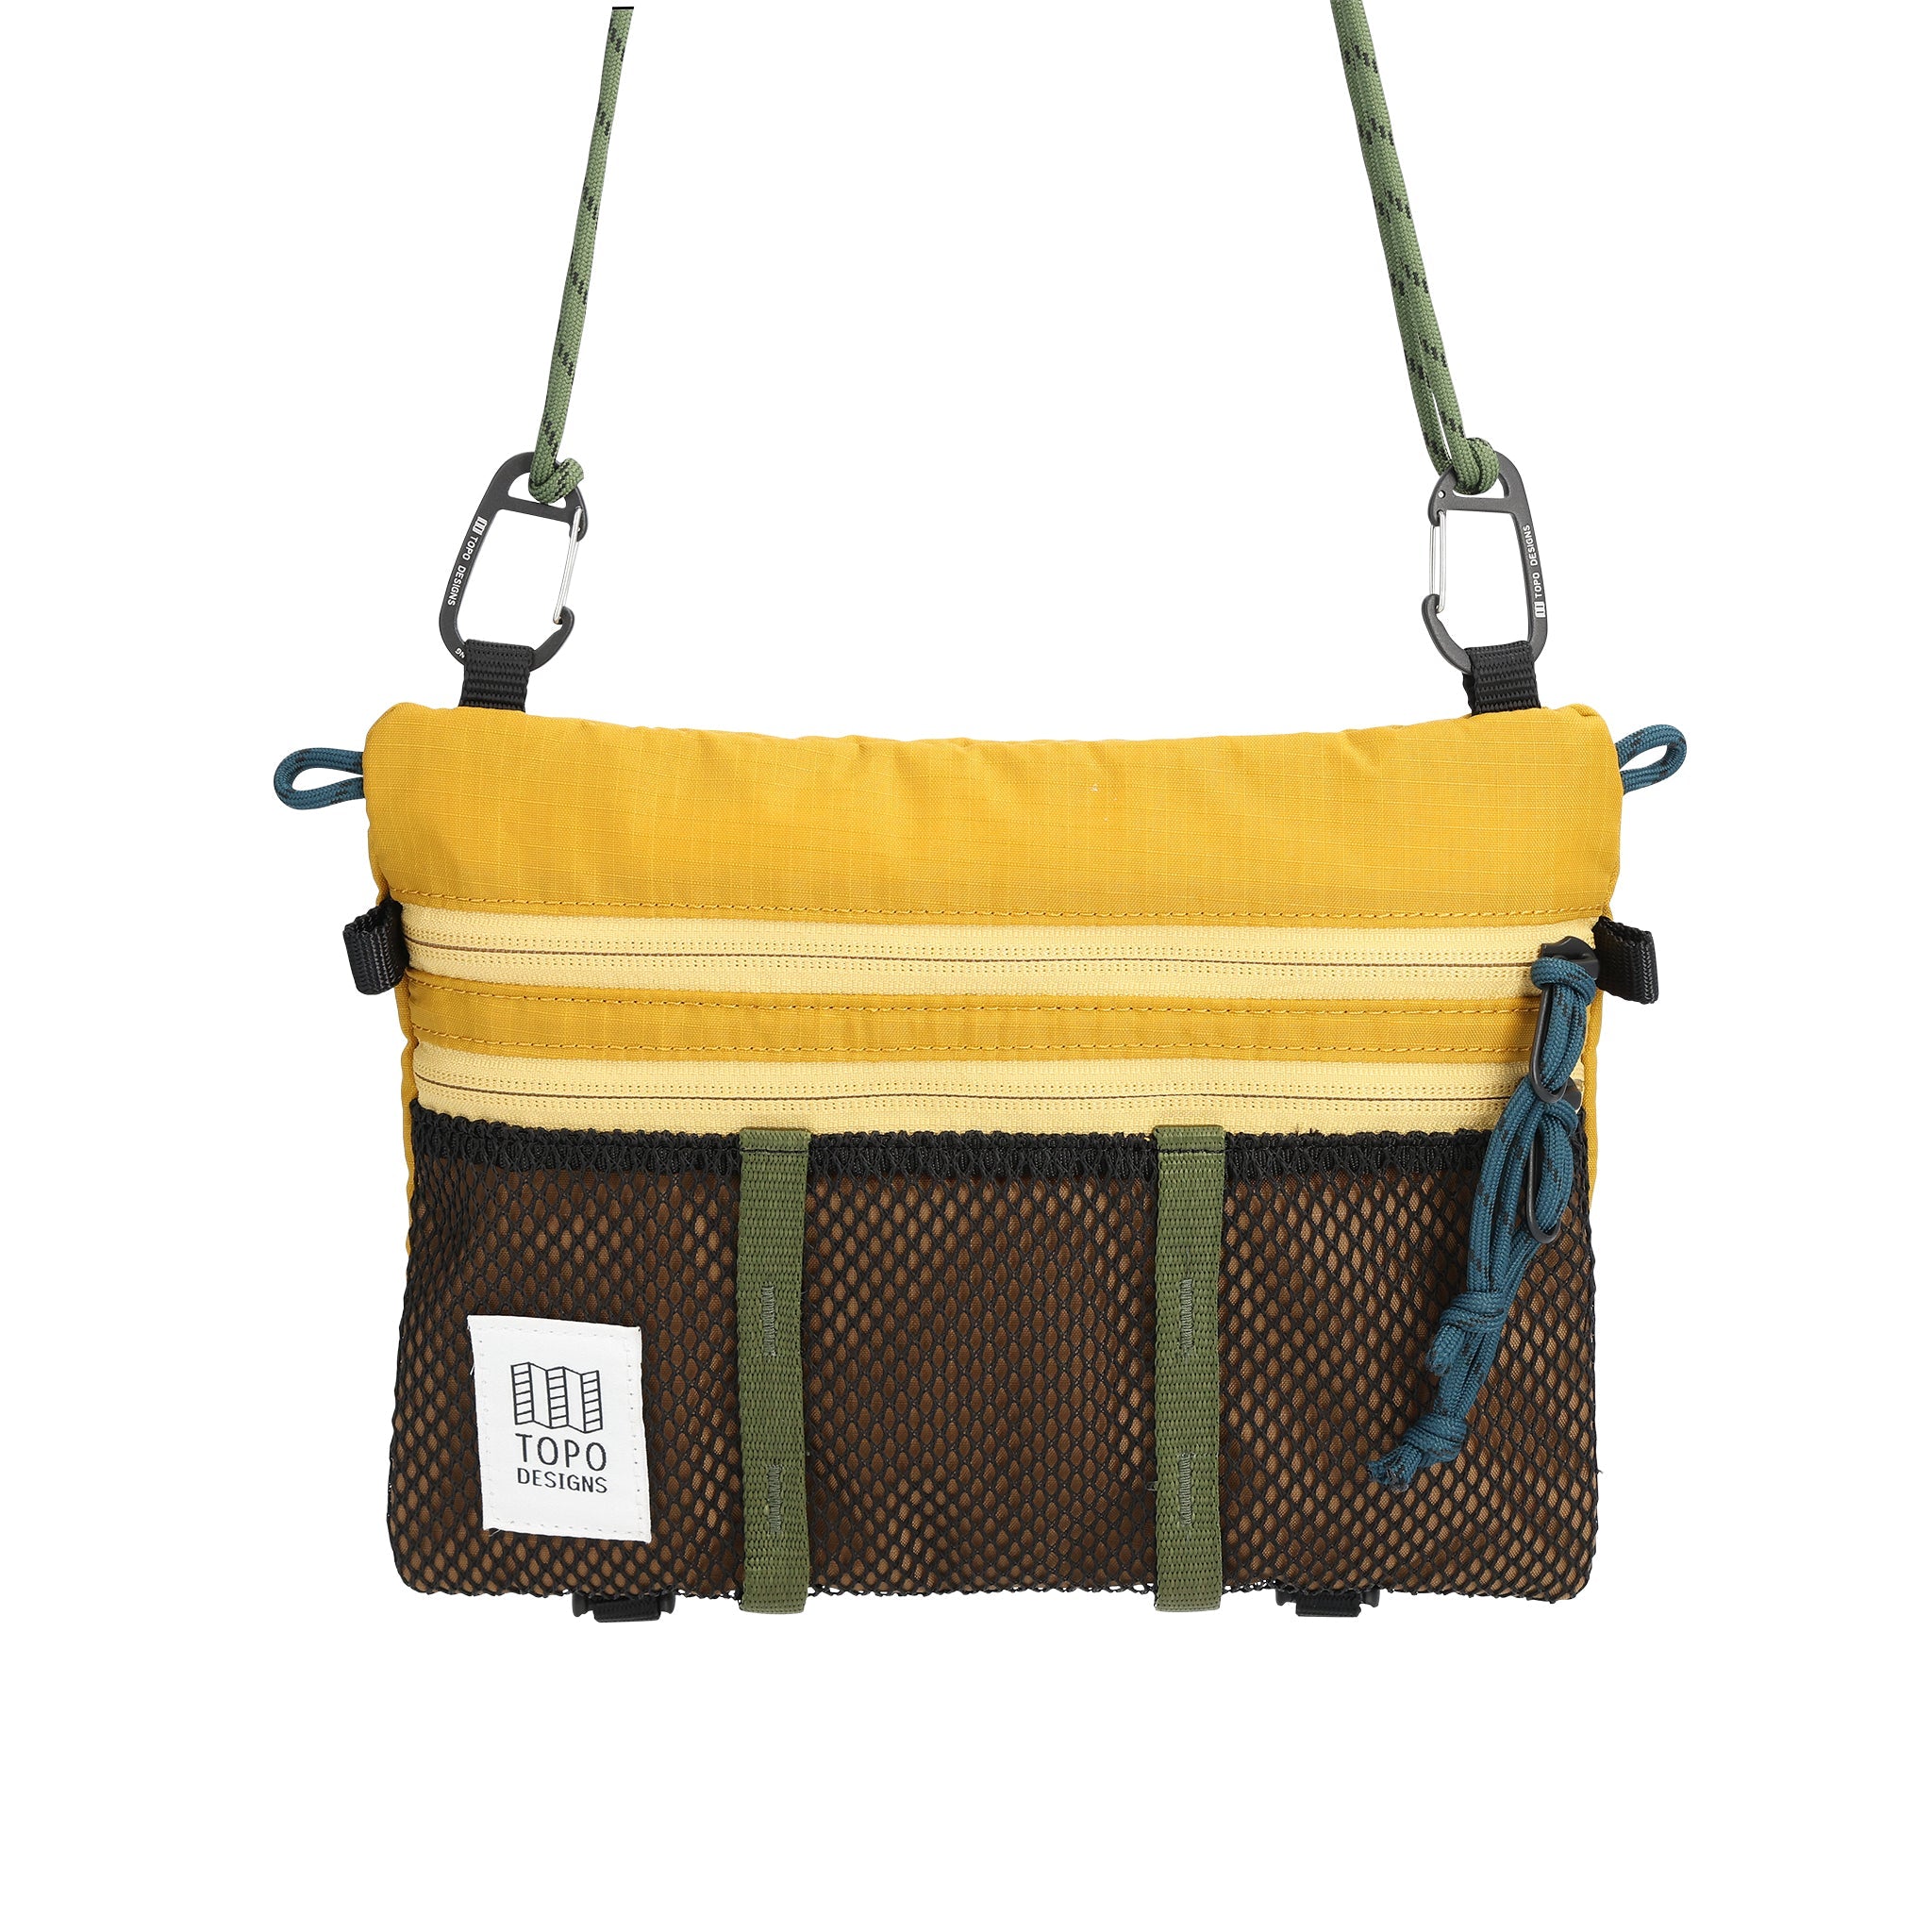 Front View of Topo Designs Mountain Accessory Shoulder Bag in "Mustard / Dark Khaki"